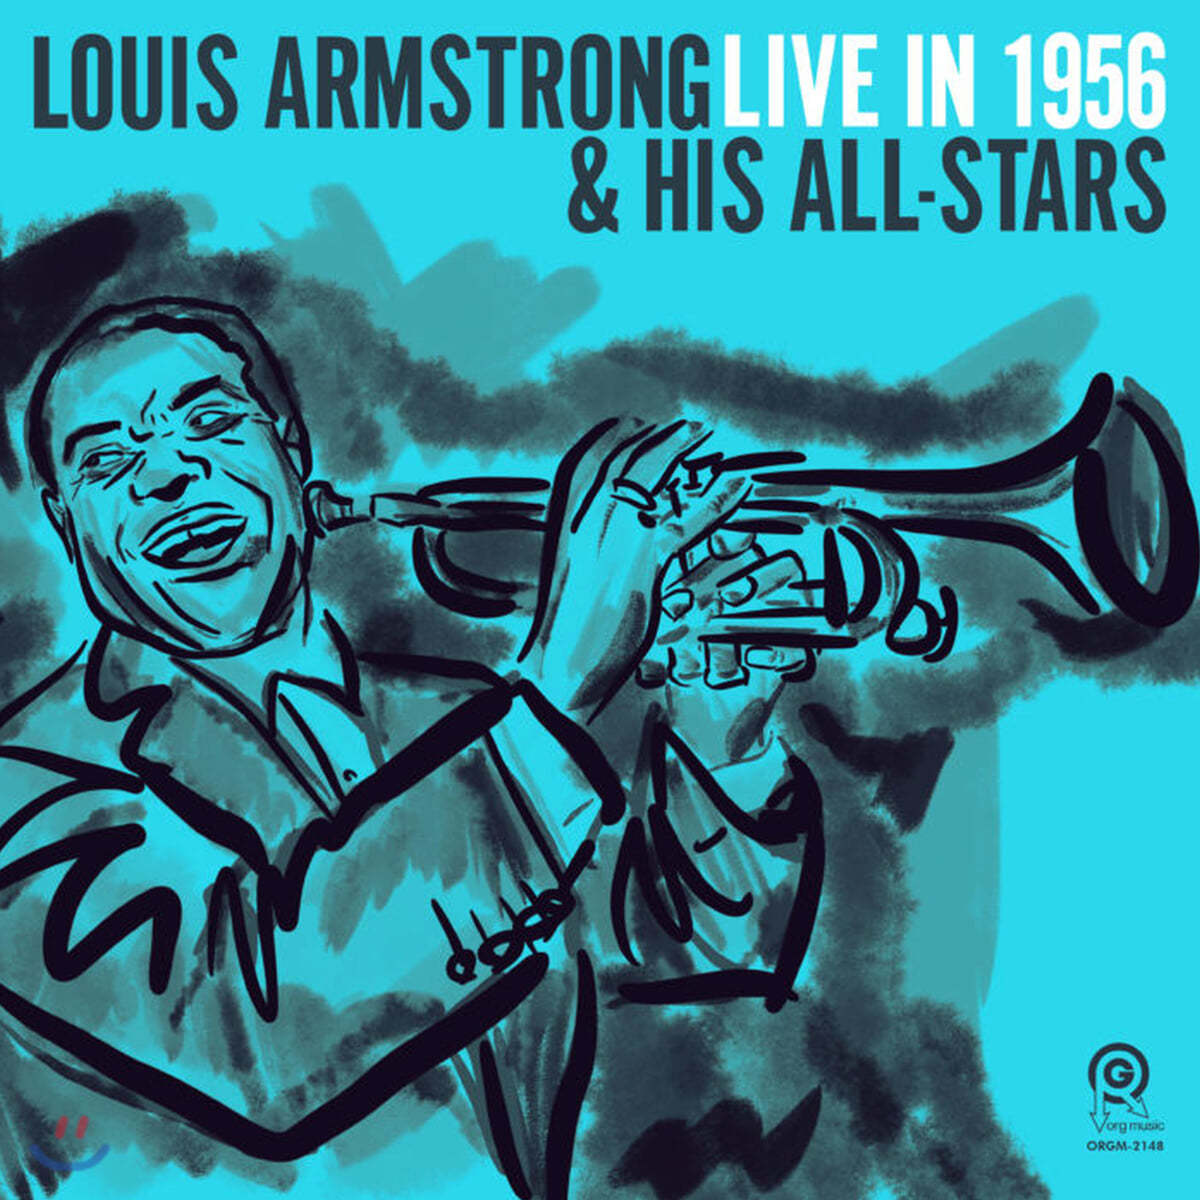 Louis Armstrong & His All-Stars (루이 암스트롱 앤 히즈 올스타즈) - Live in 1956 [아쿠아 컬러 LP]